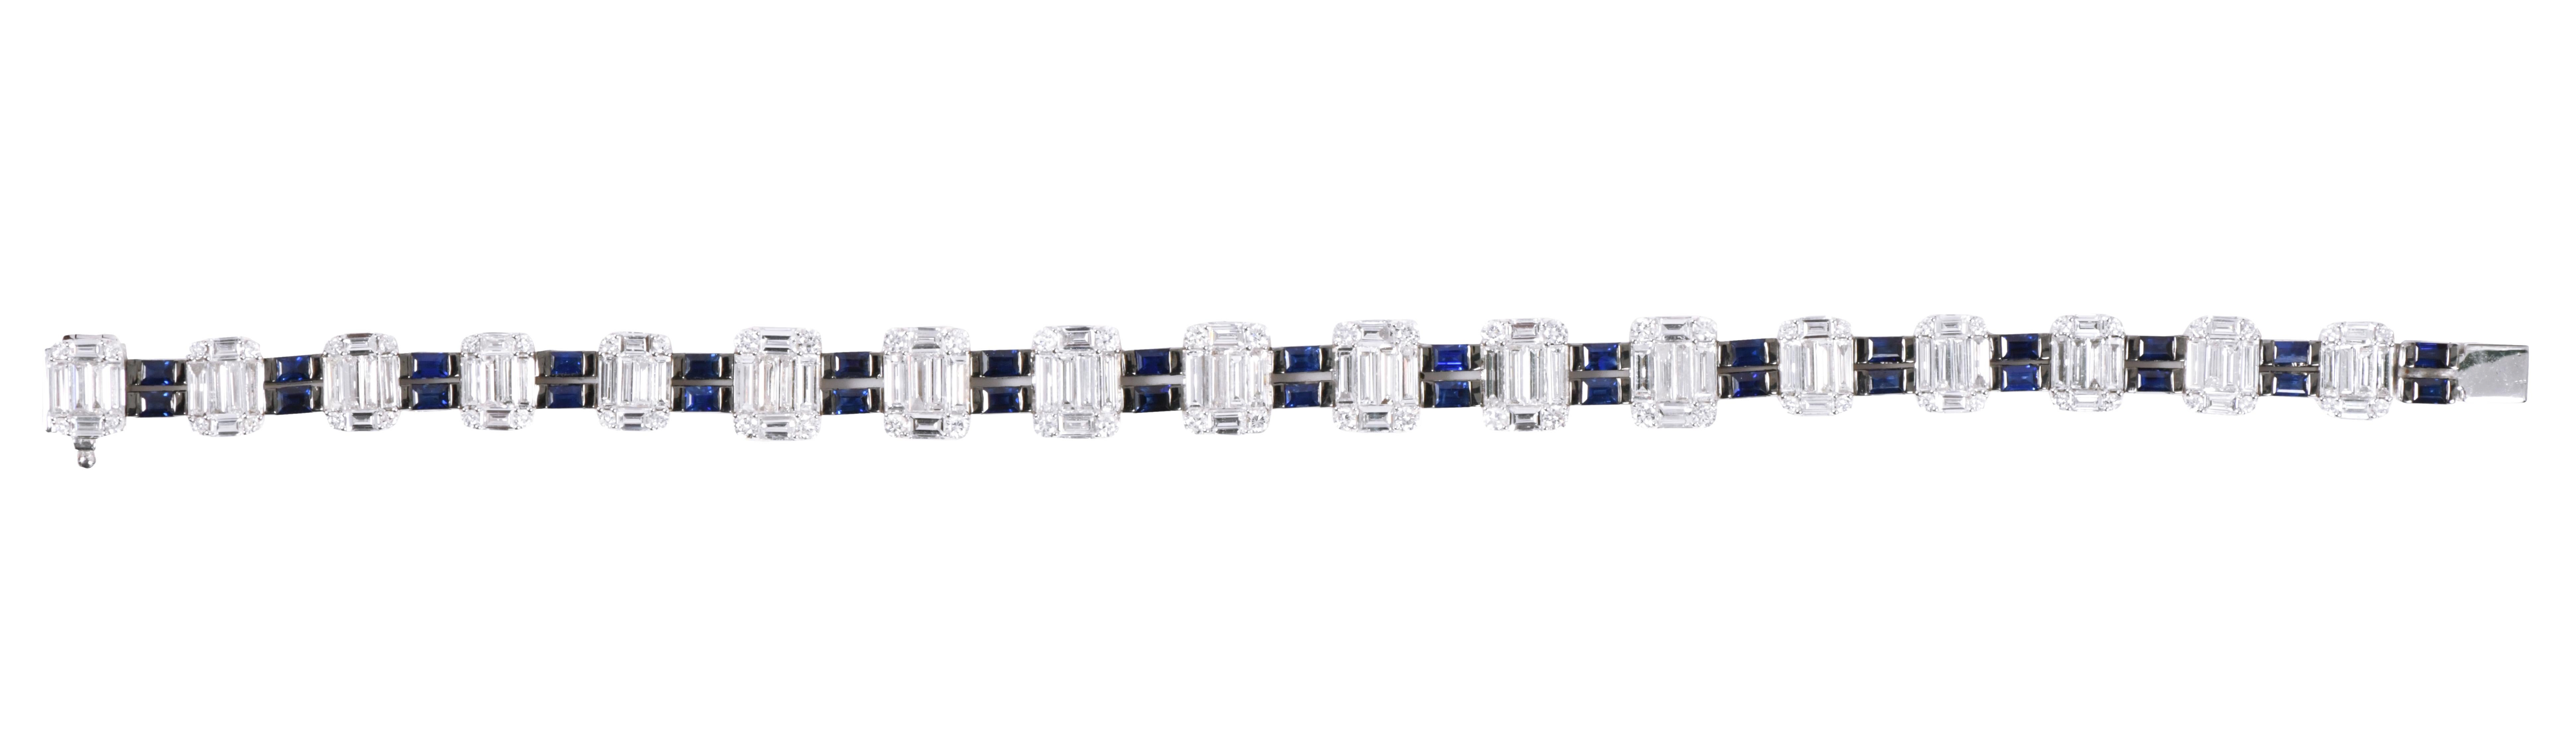 baguette diamond bracelet women's